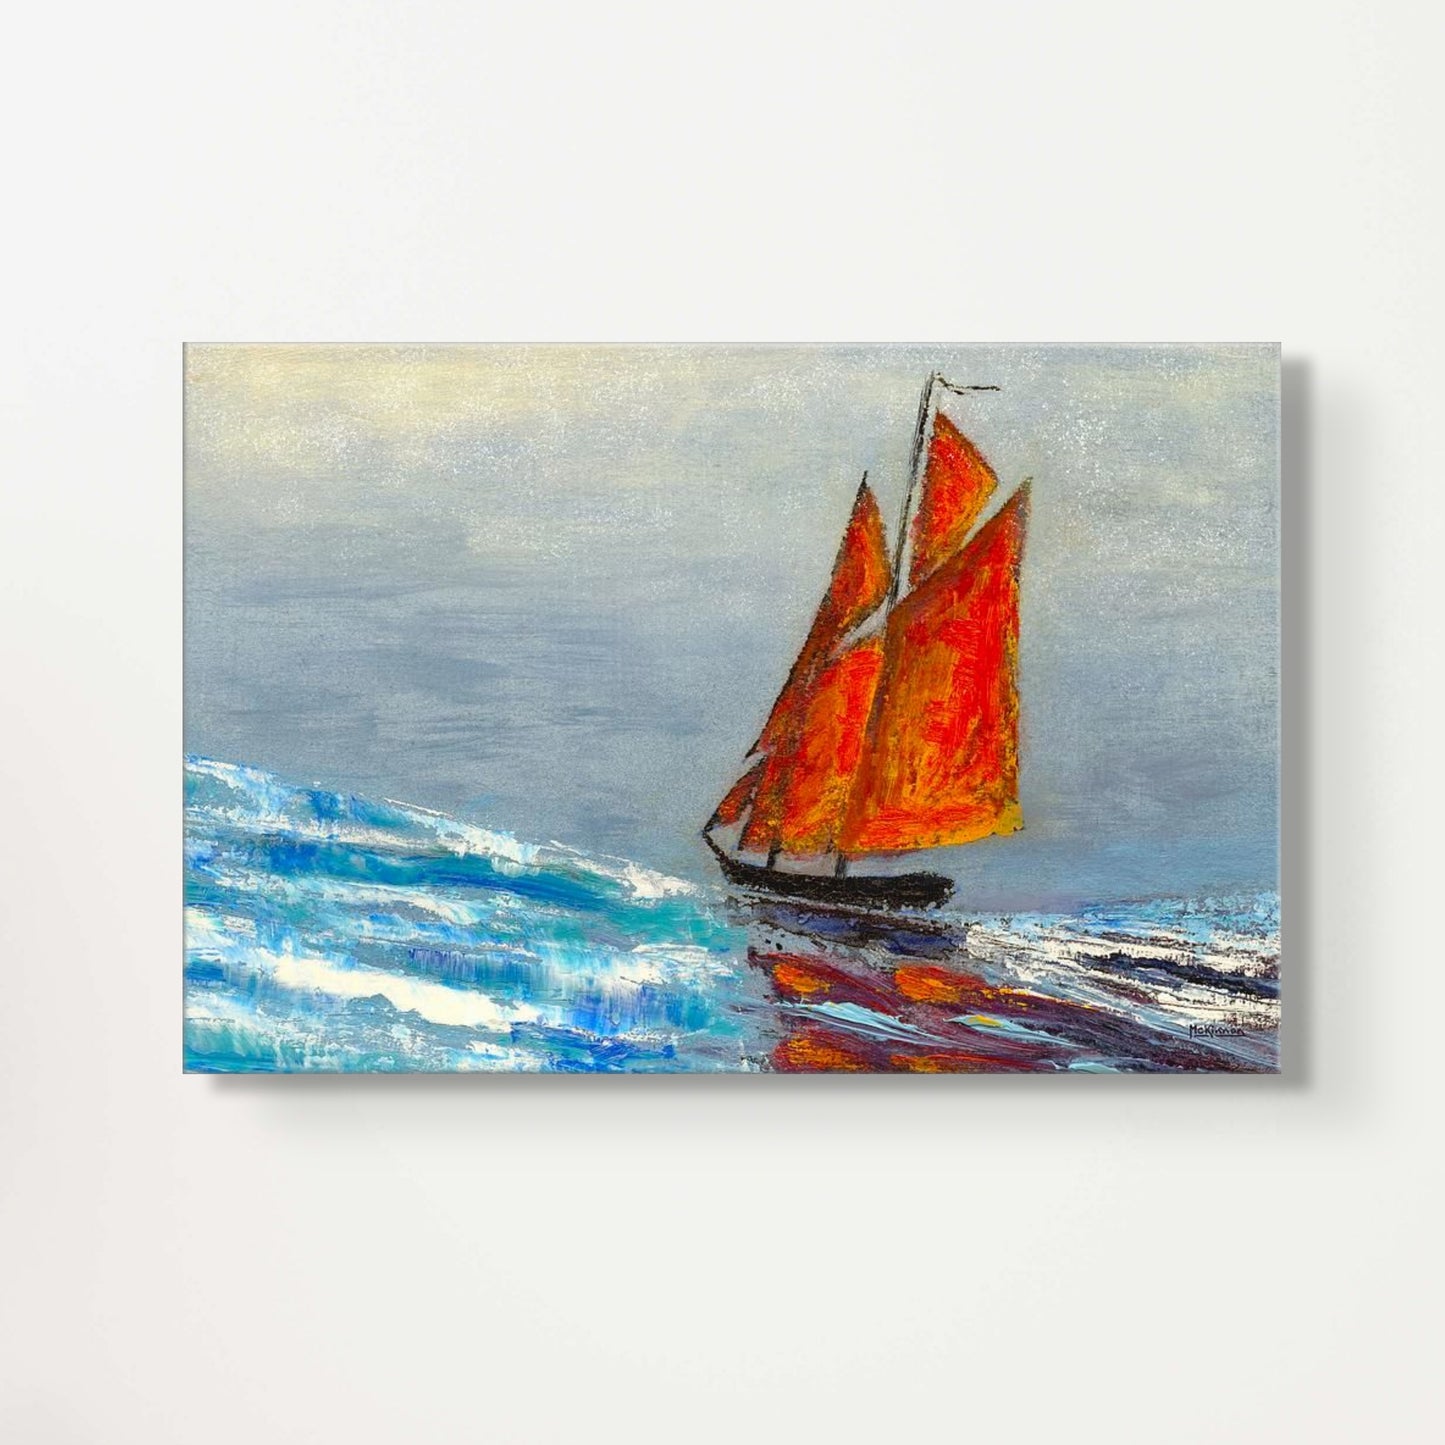 Abstract Coastal Art - Canvas Sailboat Print - Contemporary Original Ocean Painting